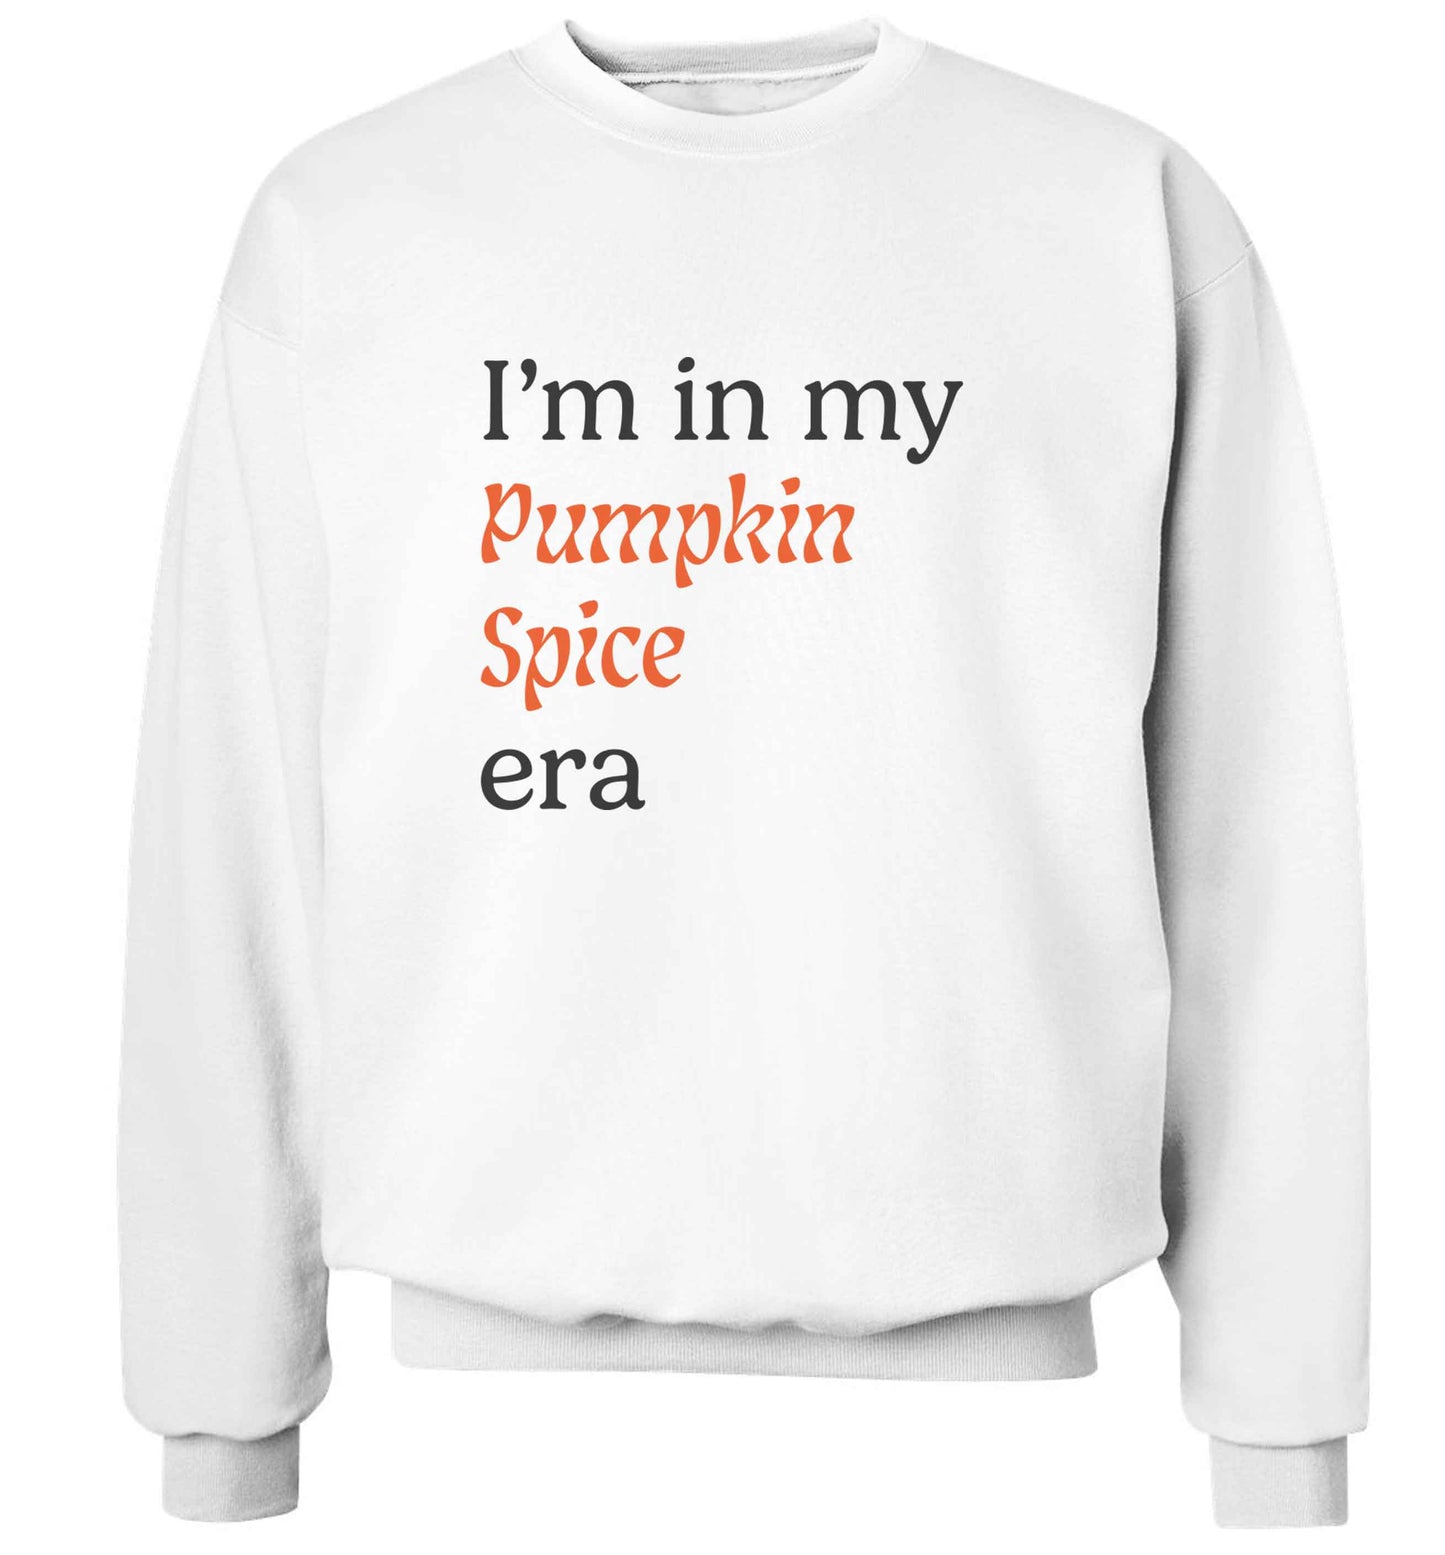 I'm in my pumpkin spice era Kit adult's unisex white sweater 2XL